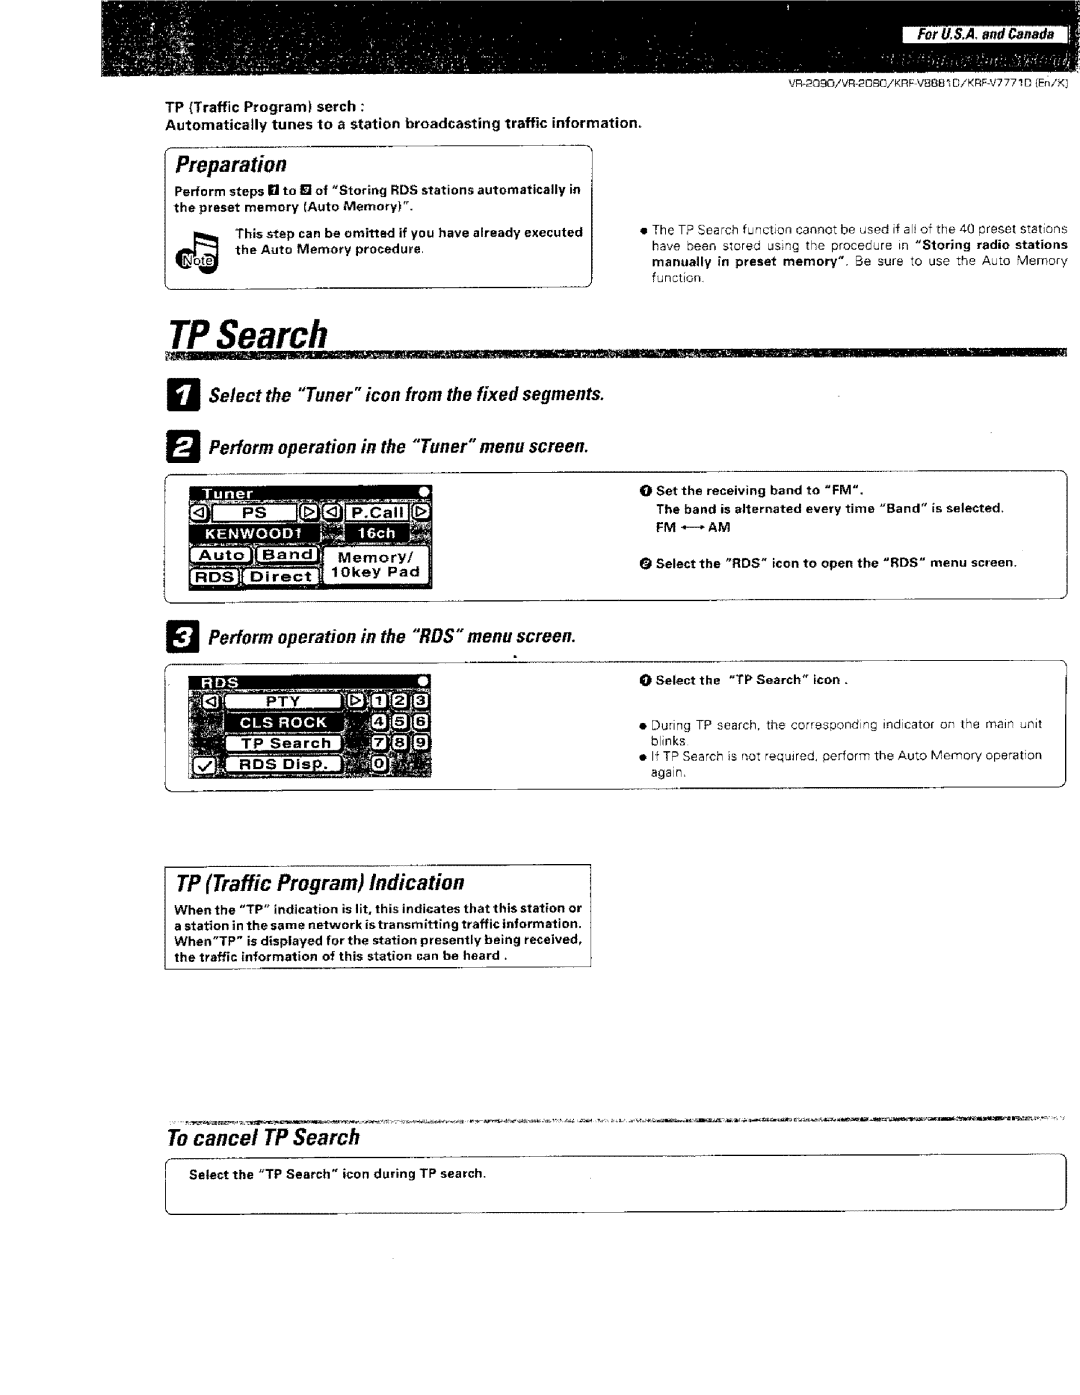 Kenwood VR-2000, KRF-VBB81 D instruction manual Pre-paration, TP Traffic Program Indication, To cancel TP Search 